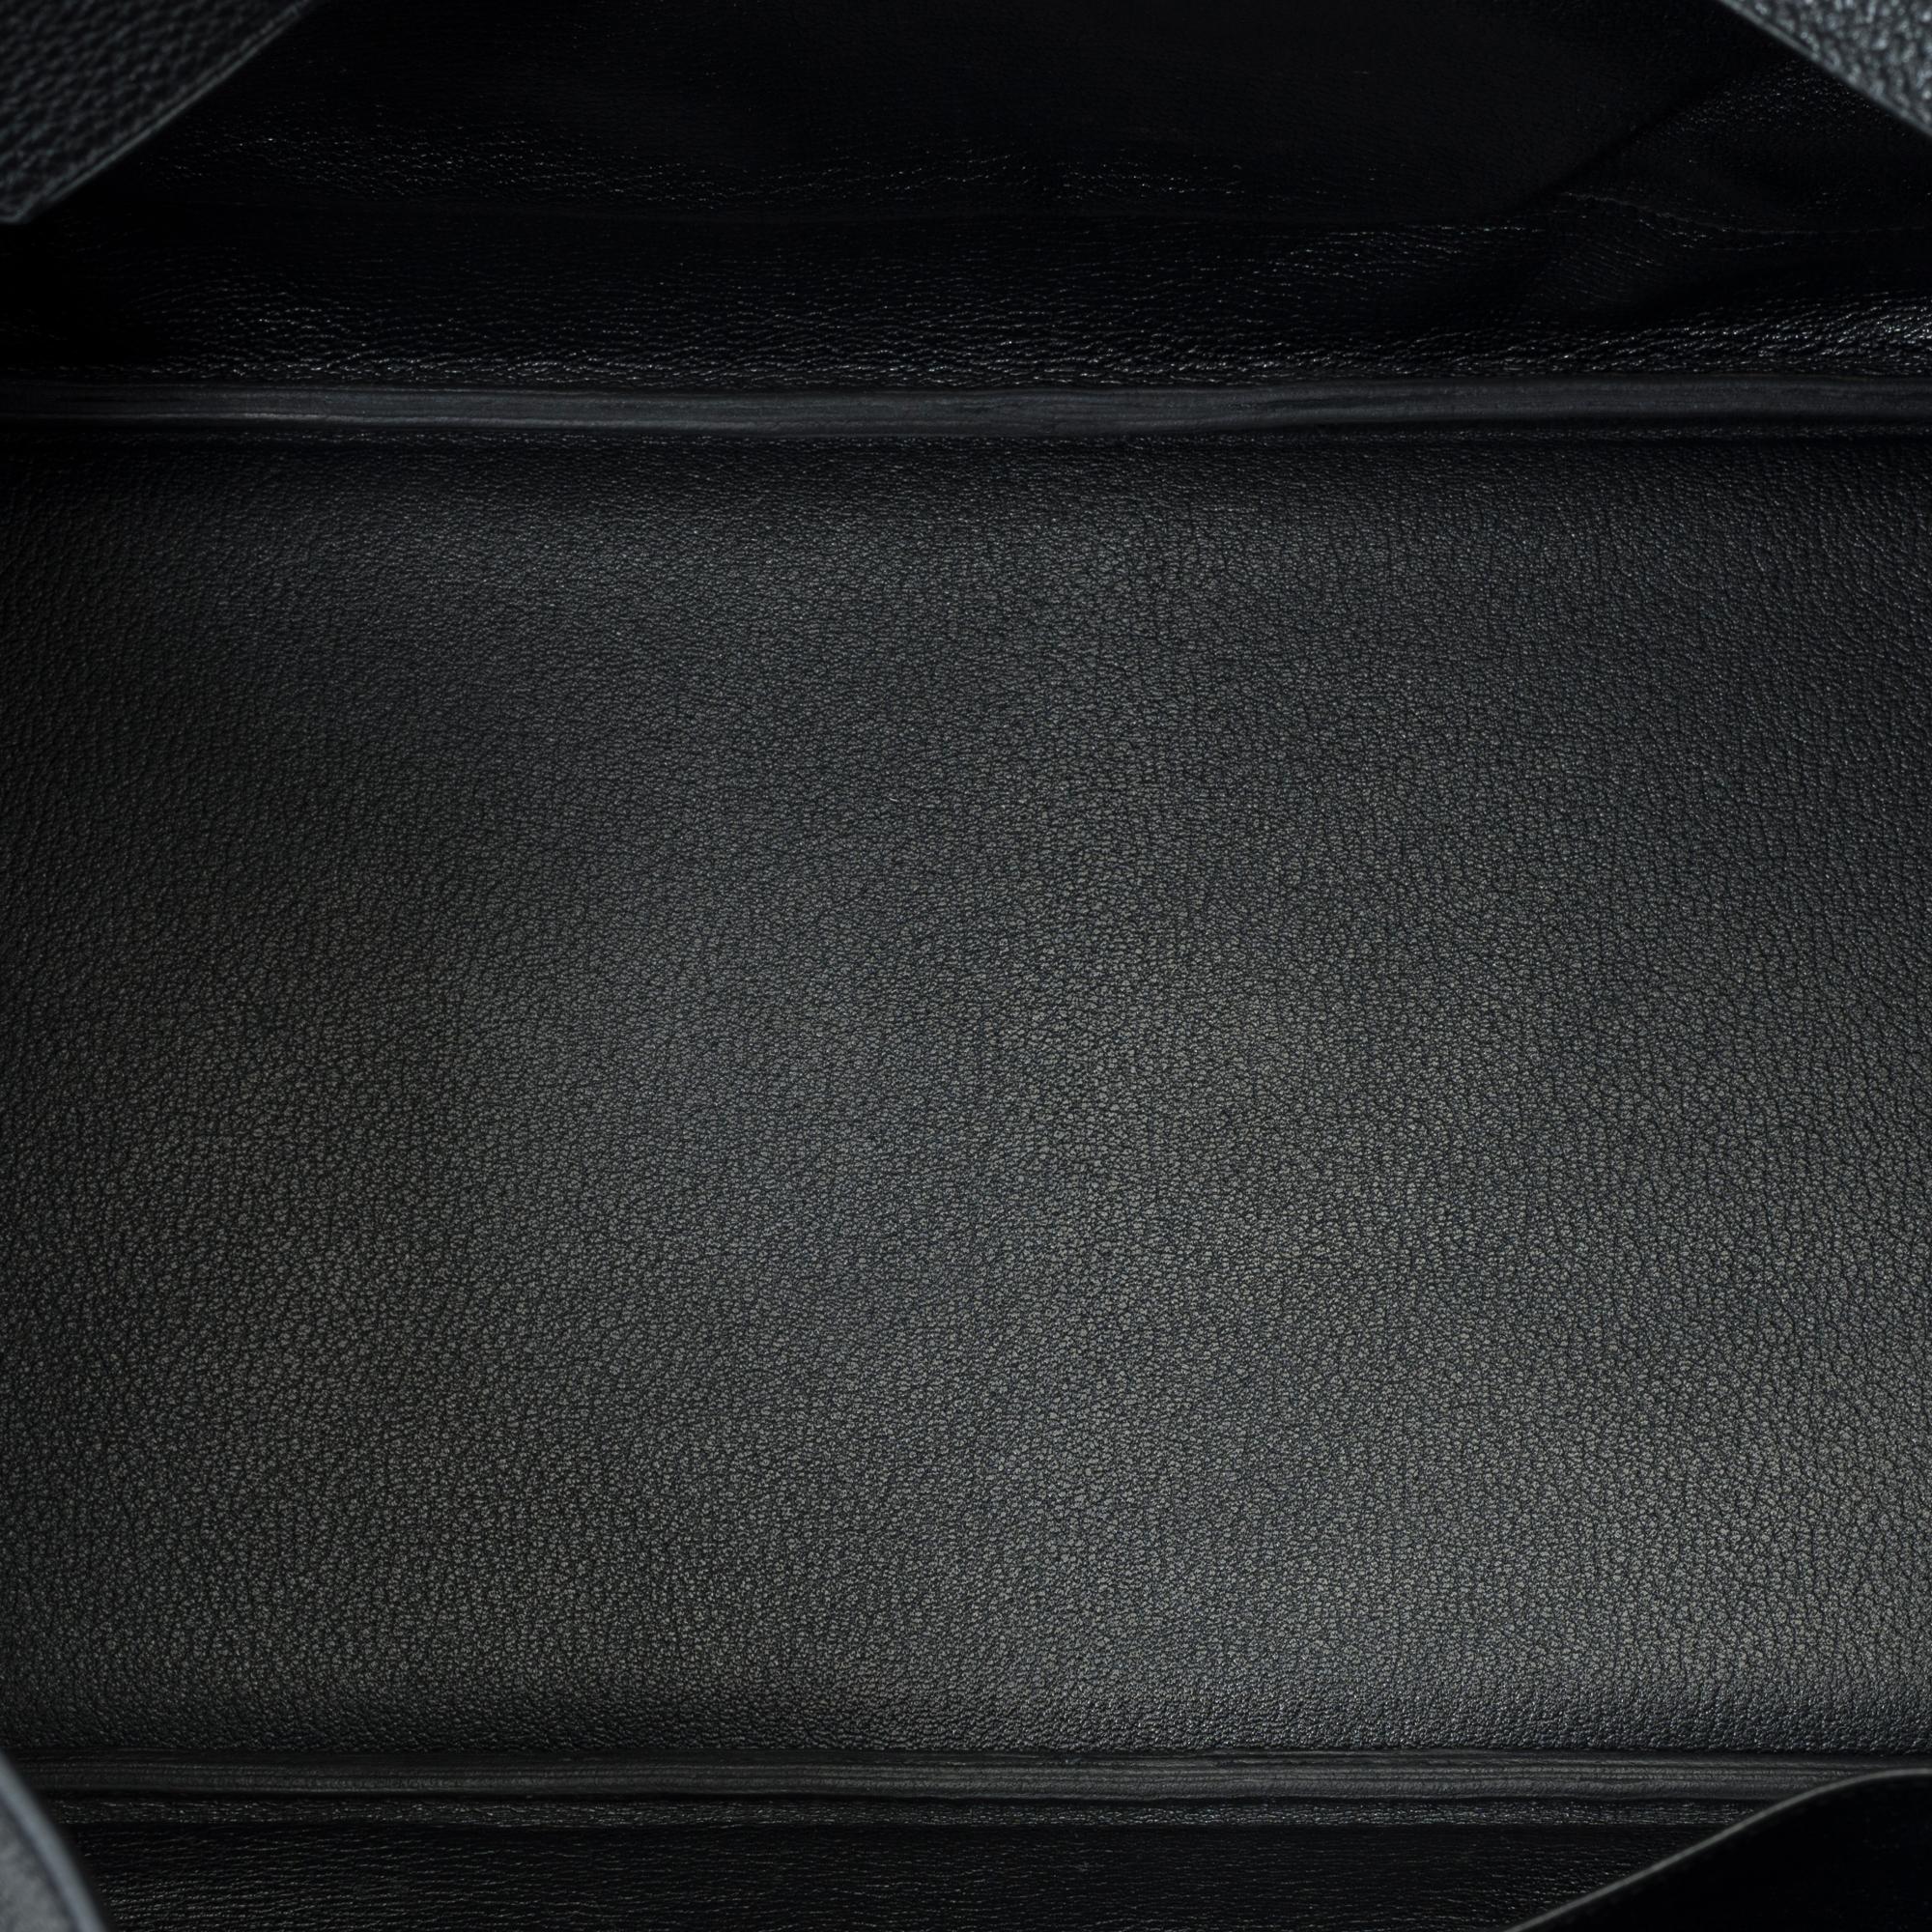 Very Classy Hermes Birkin 40 handbag in Black Togo Calf leather, SHW 4